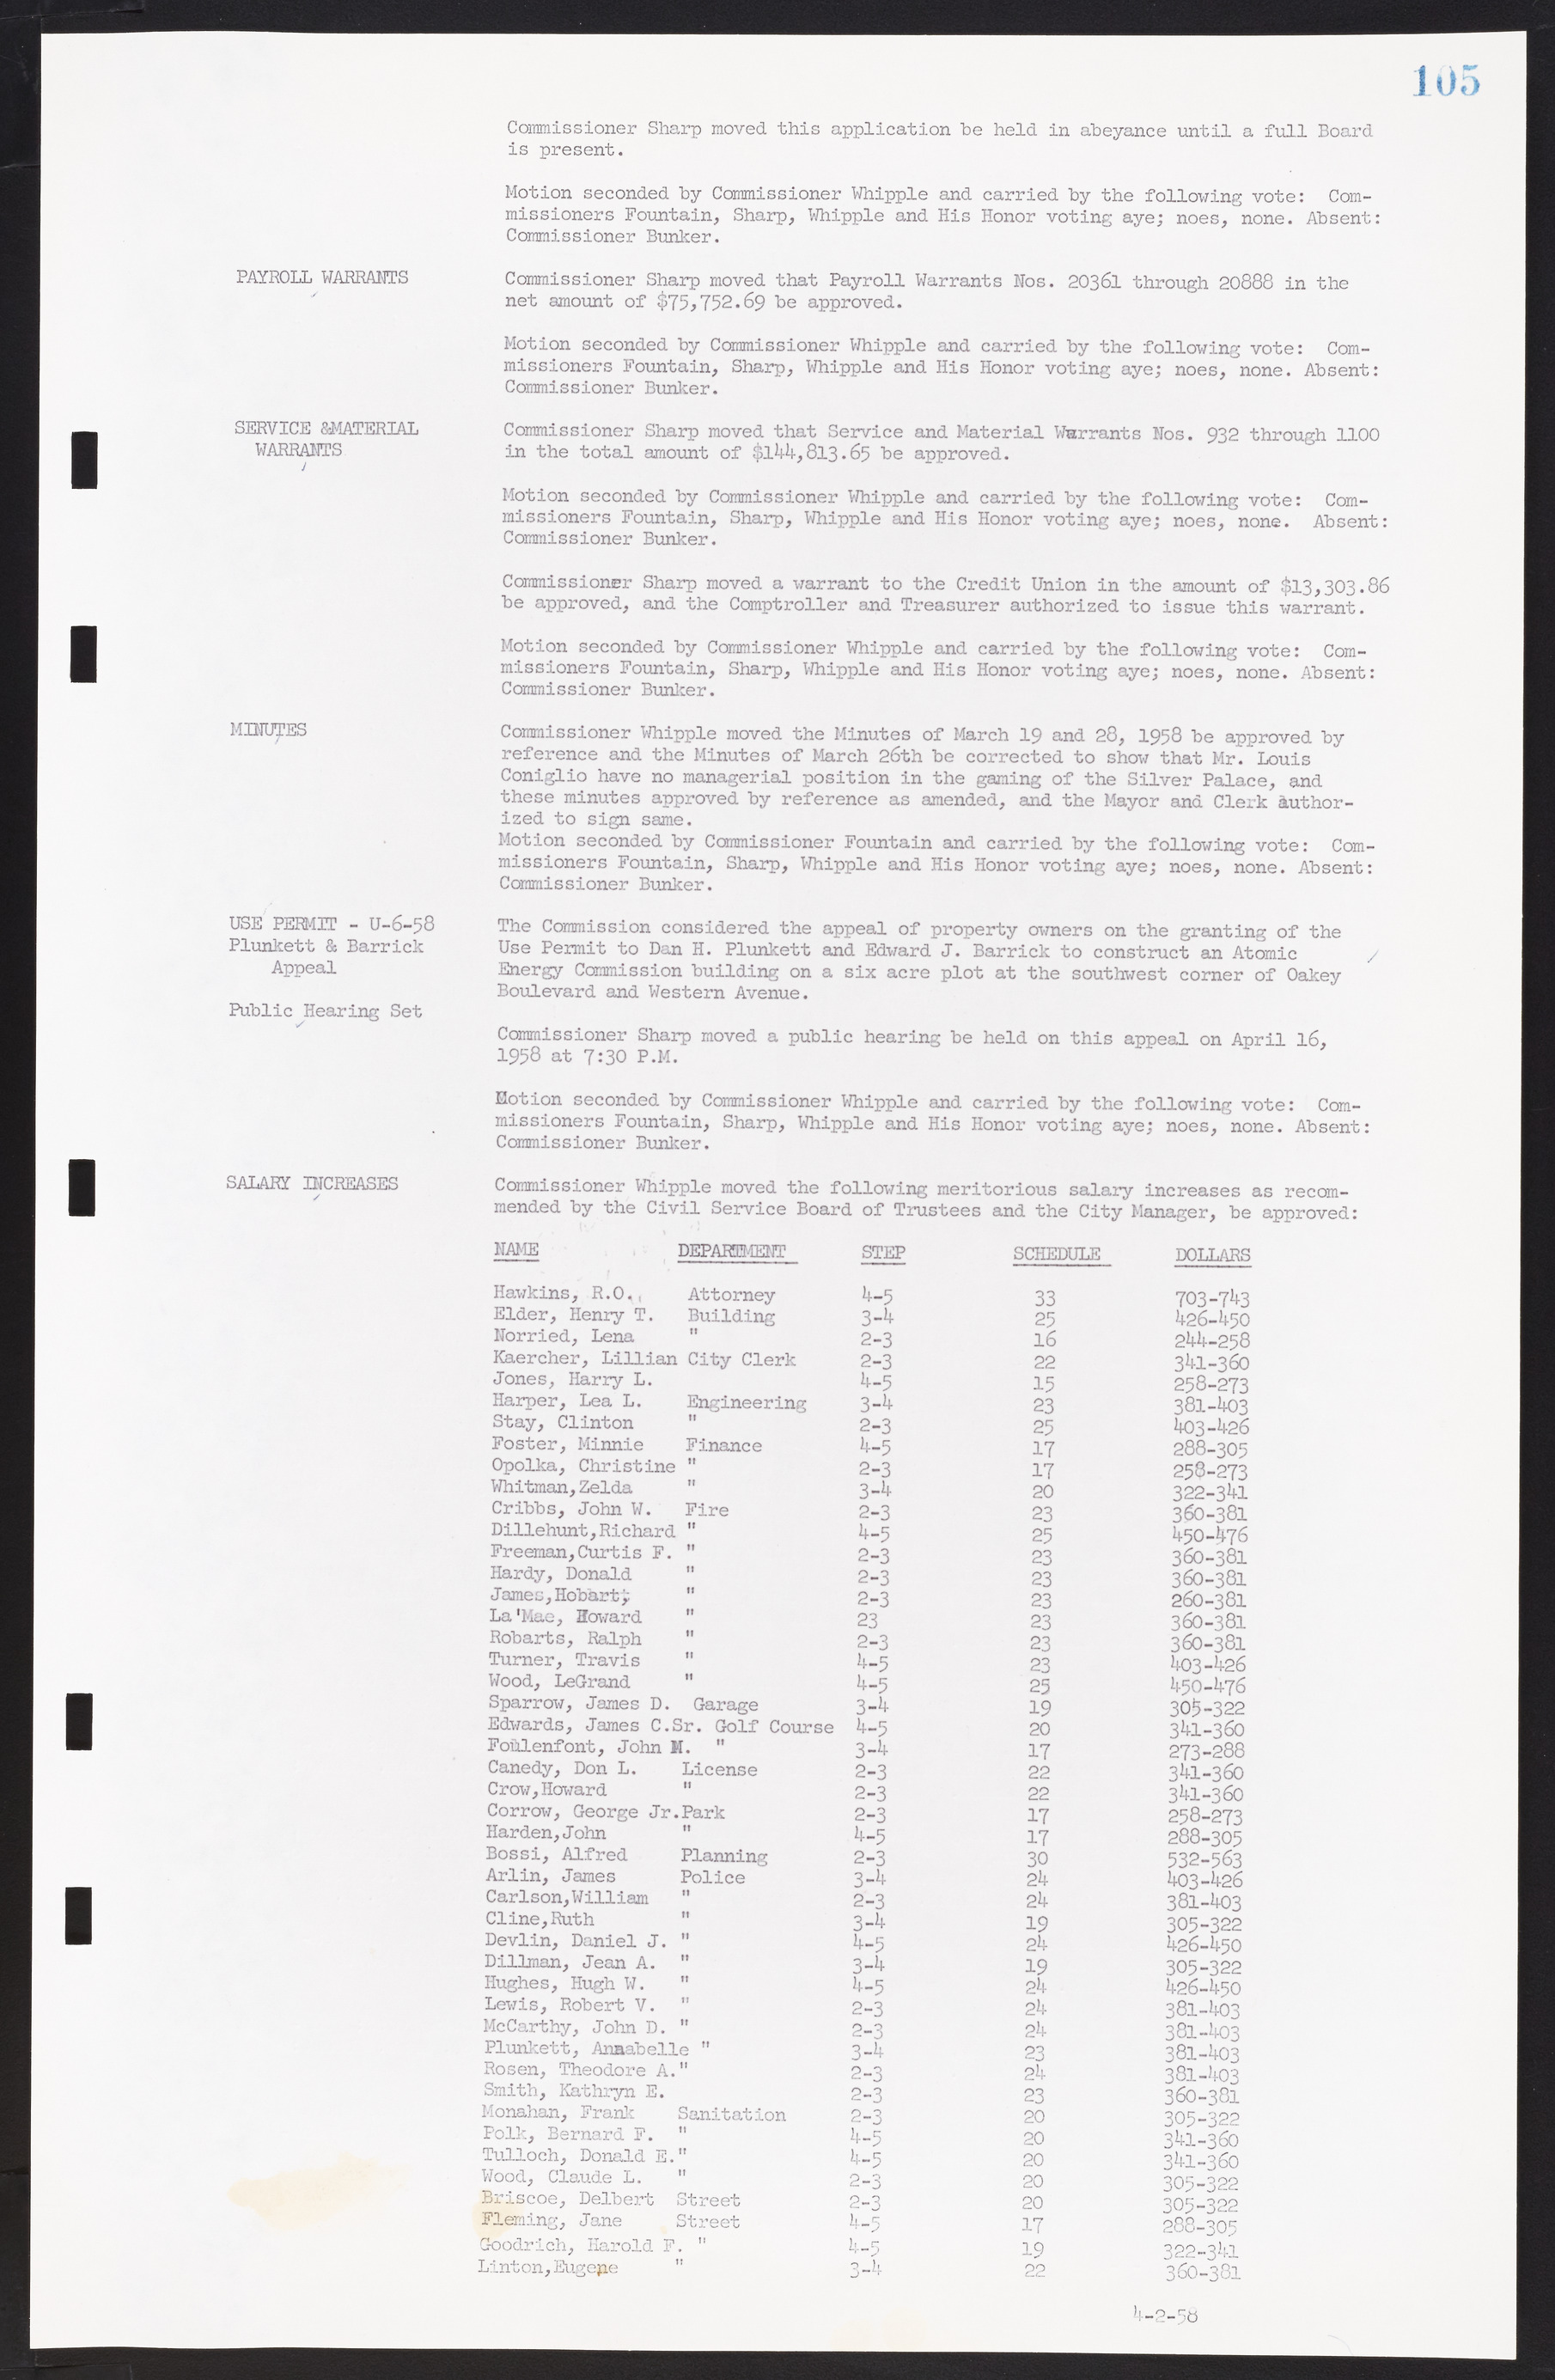 Las Vegas City Commission Minutes, November 20, 1957 to December 2, 1959, lvc000011-109